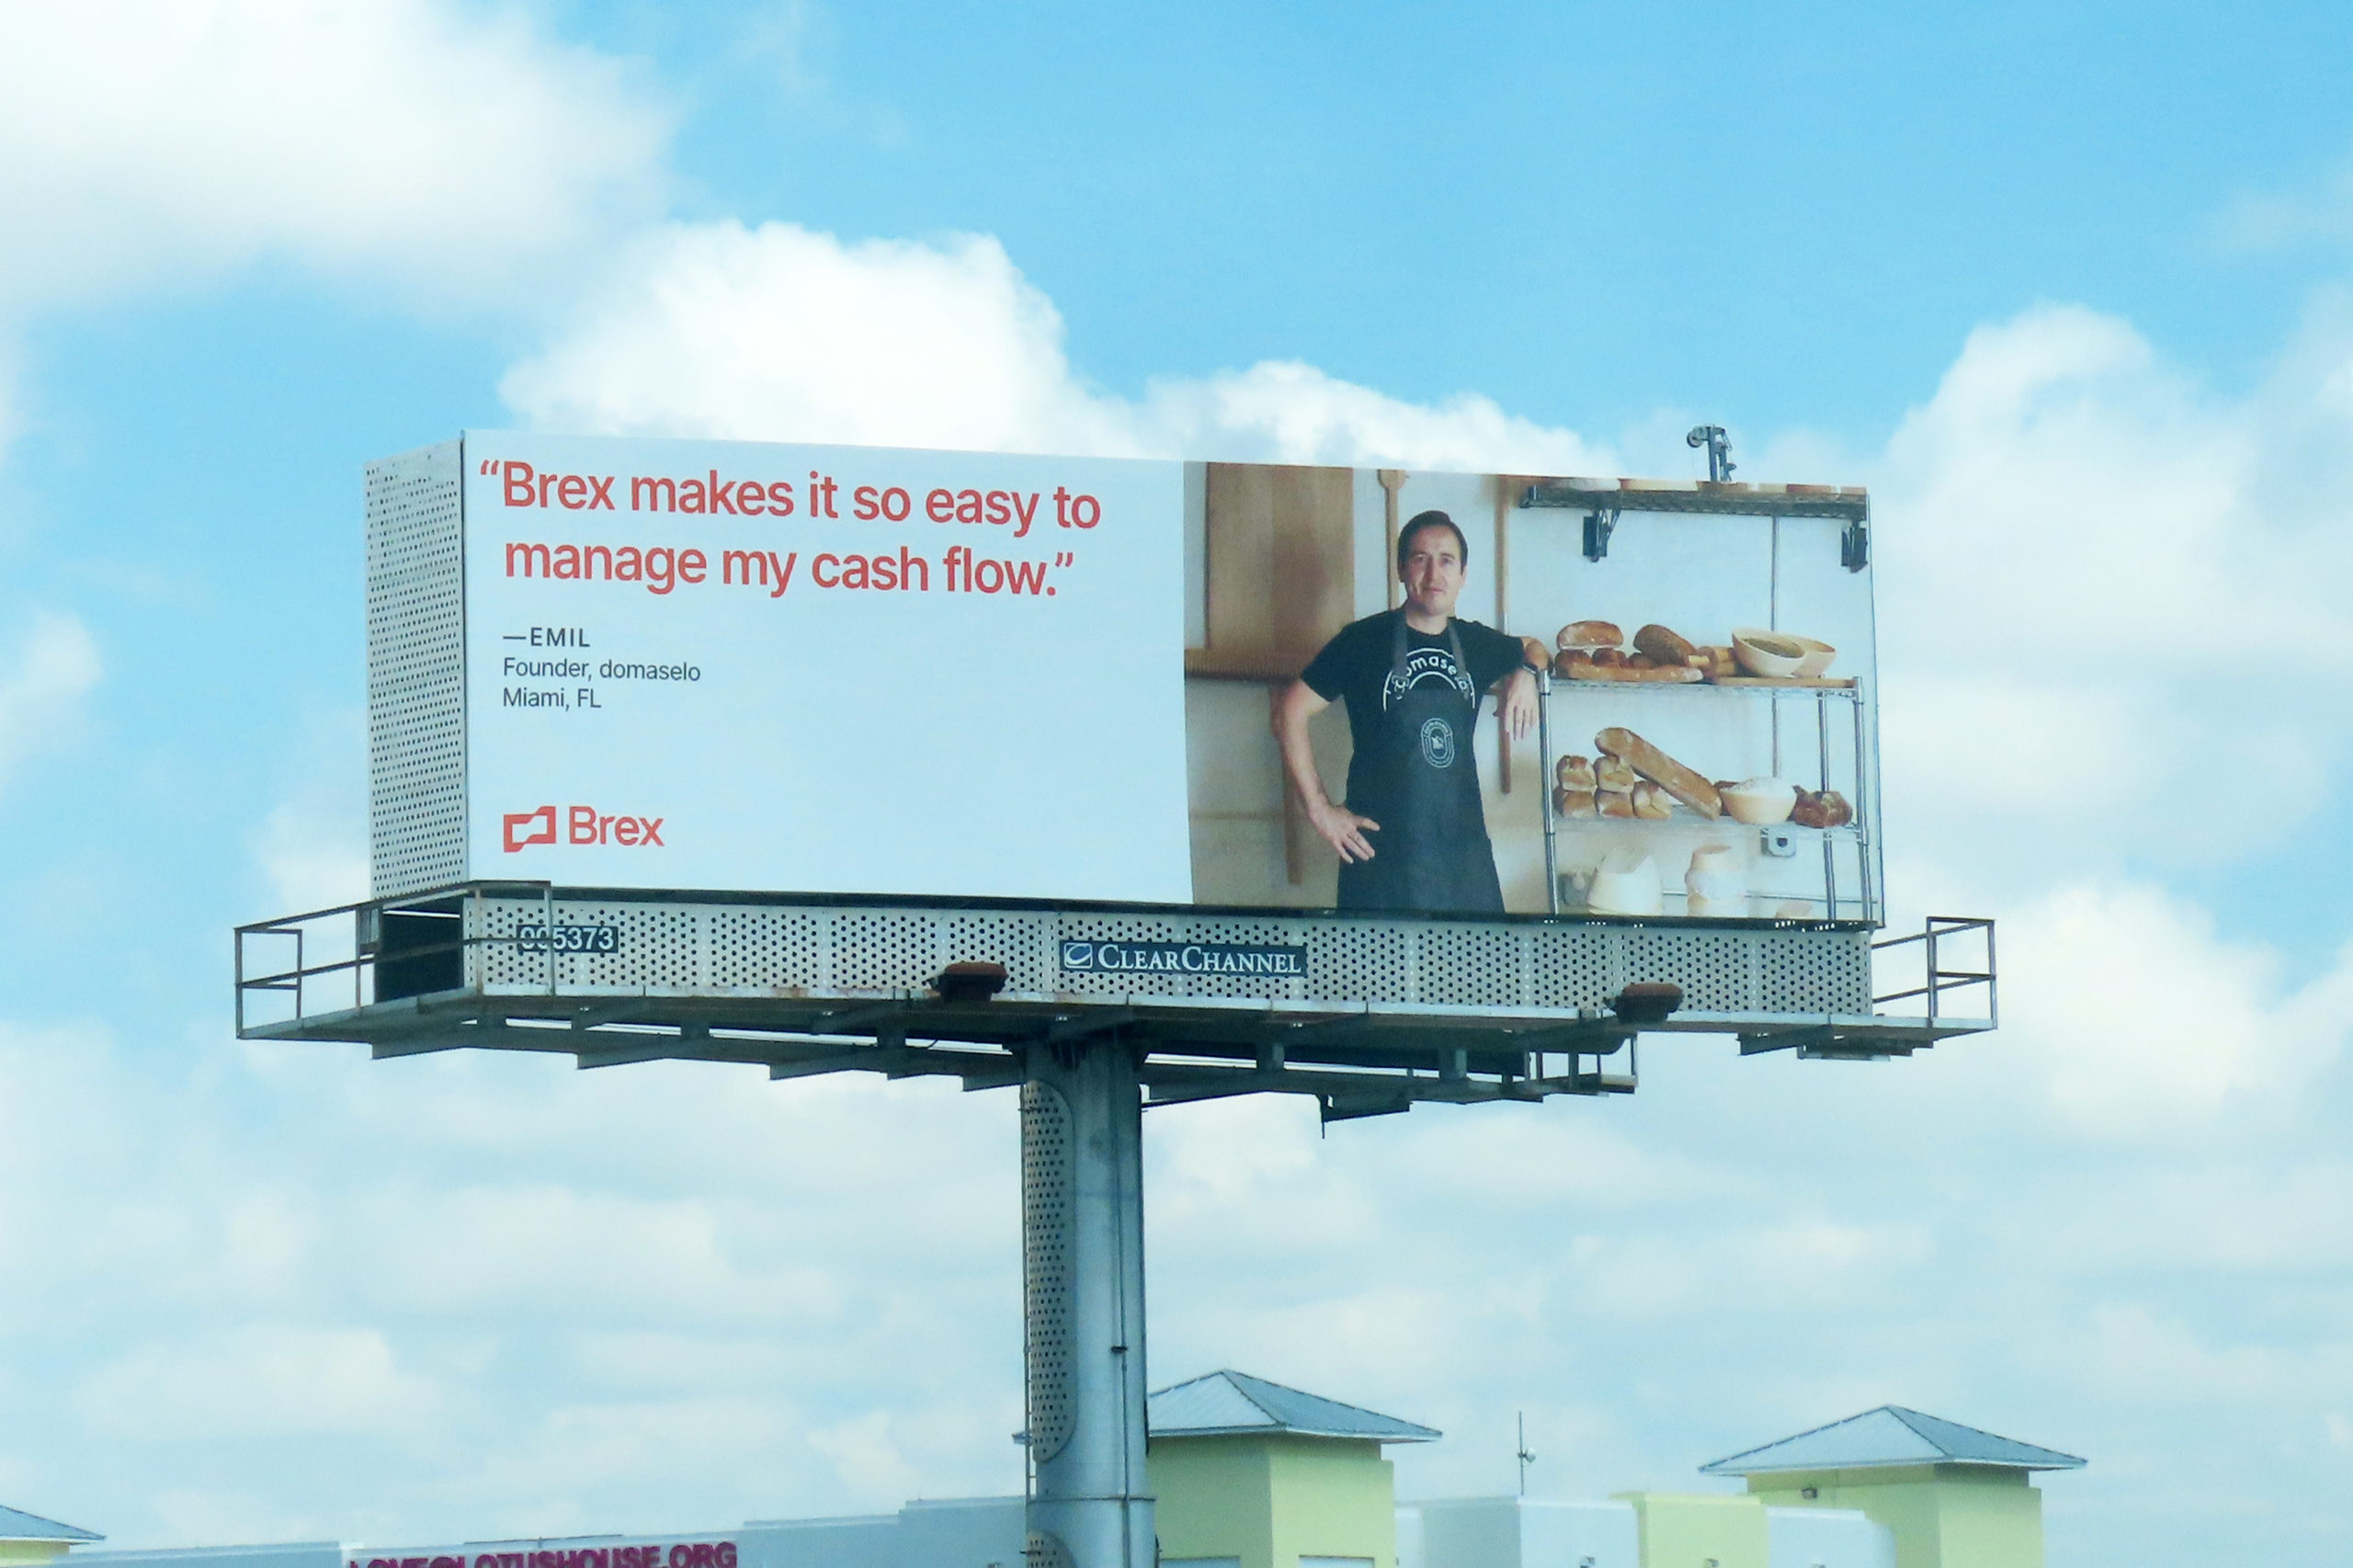 Brex OOH billboard marketing advertising campaign